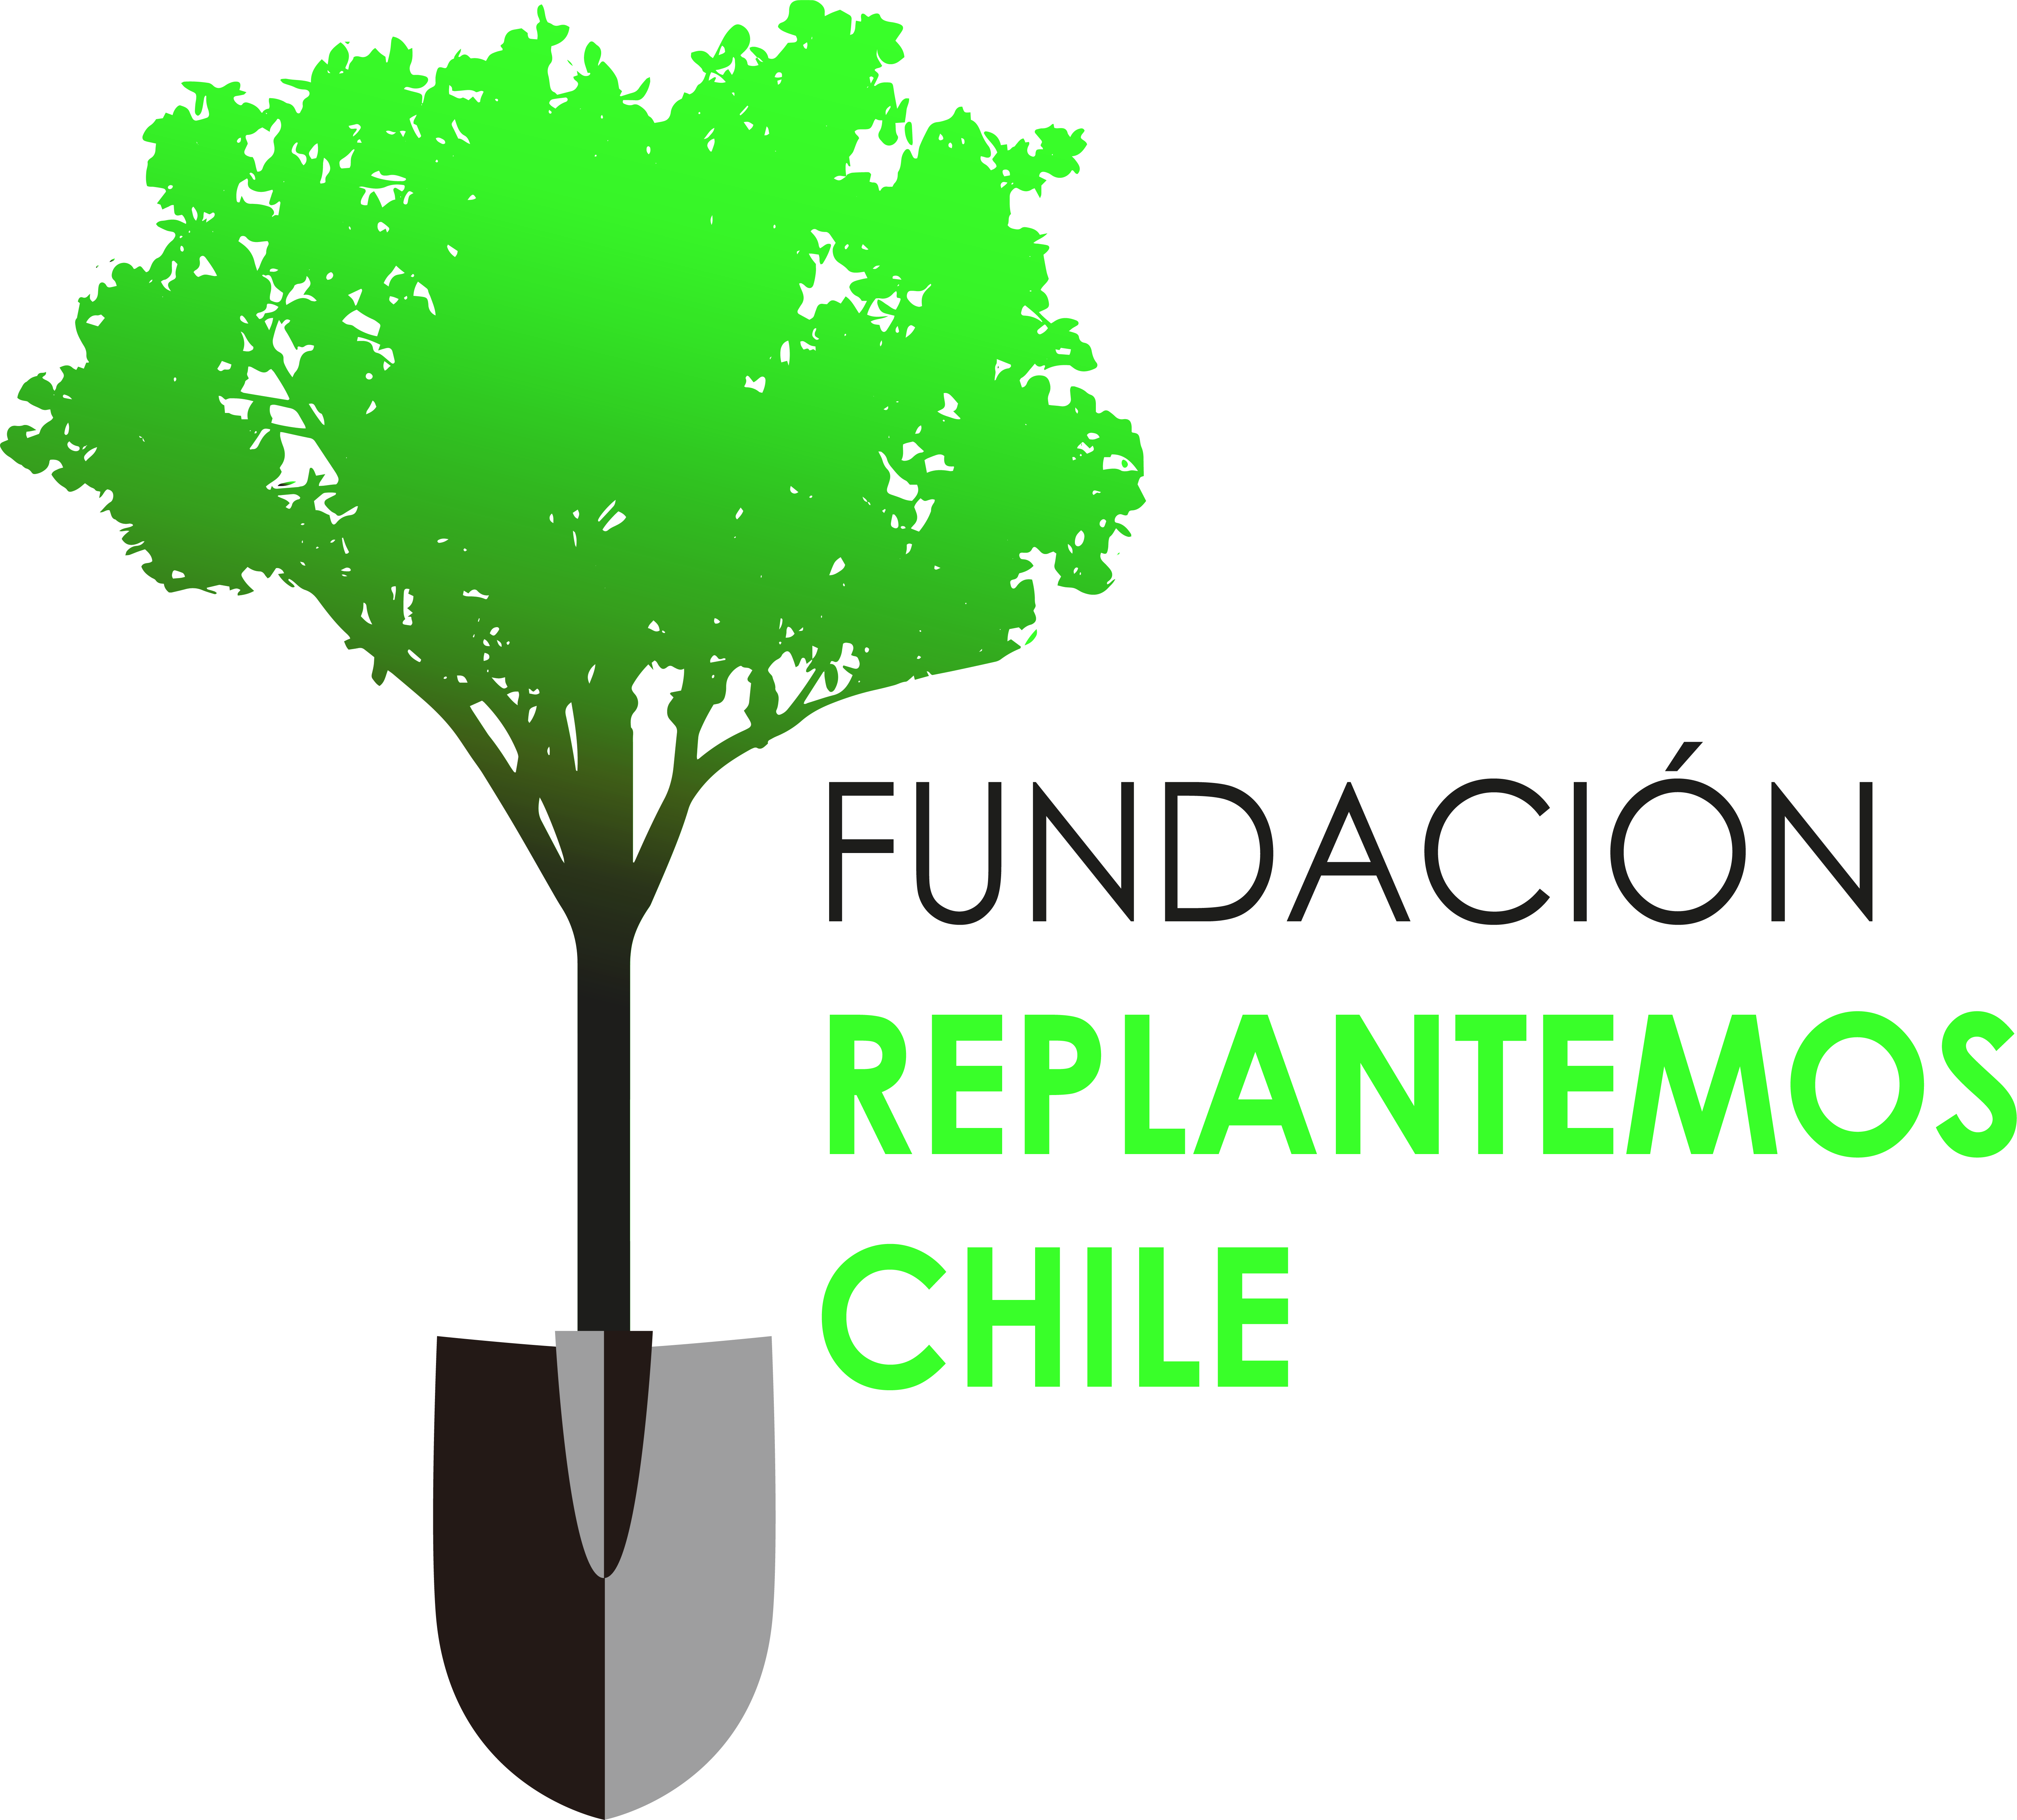 www.fundacionreplantemoschile.cl